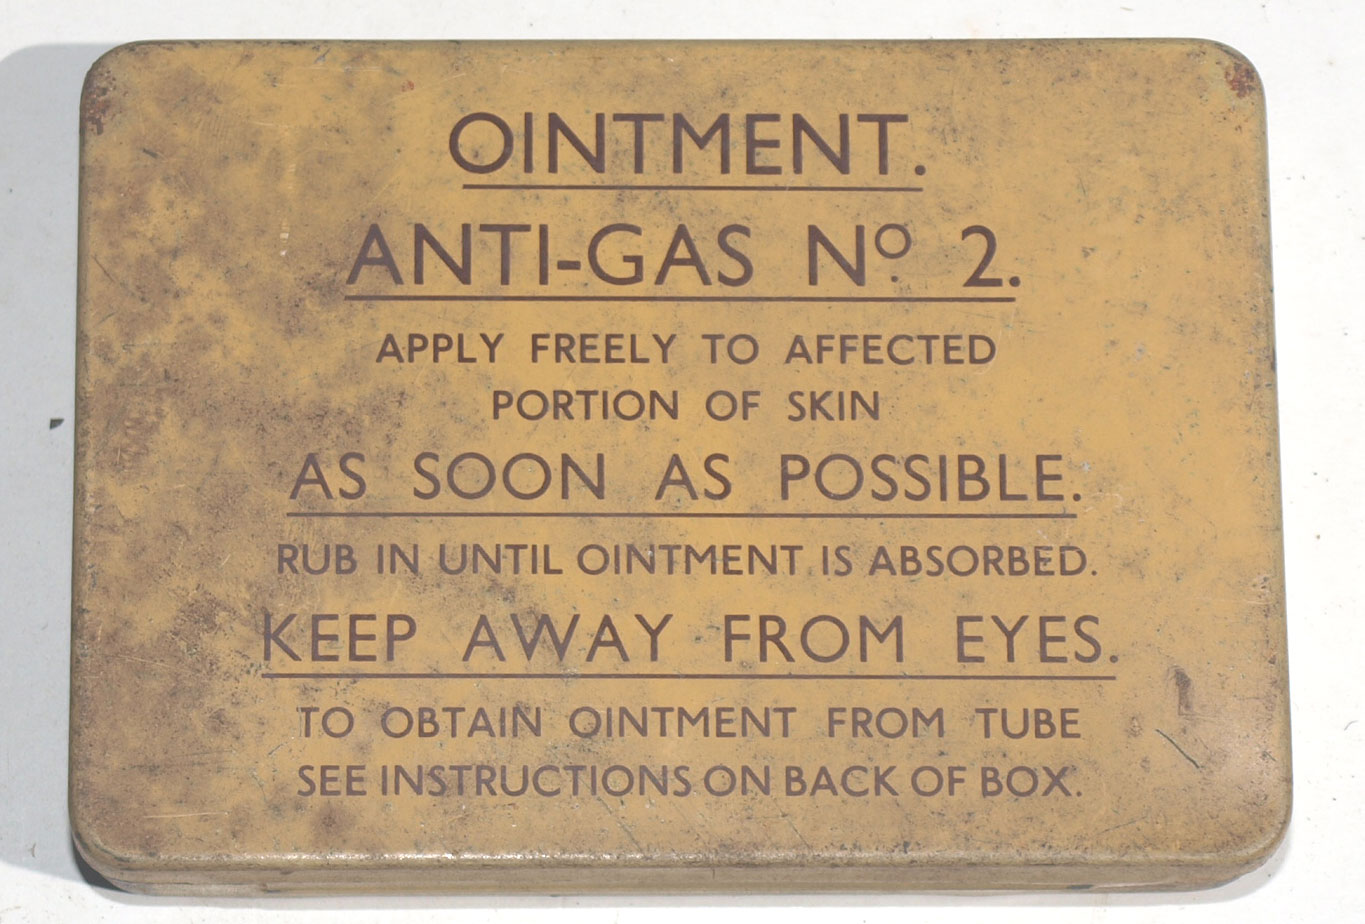 Anti Gas Ointment No2 tin-full £40.00 